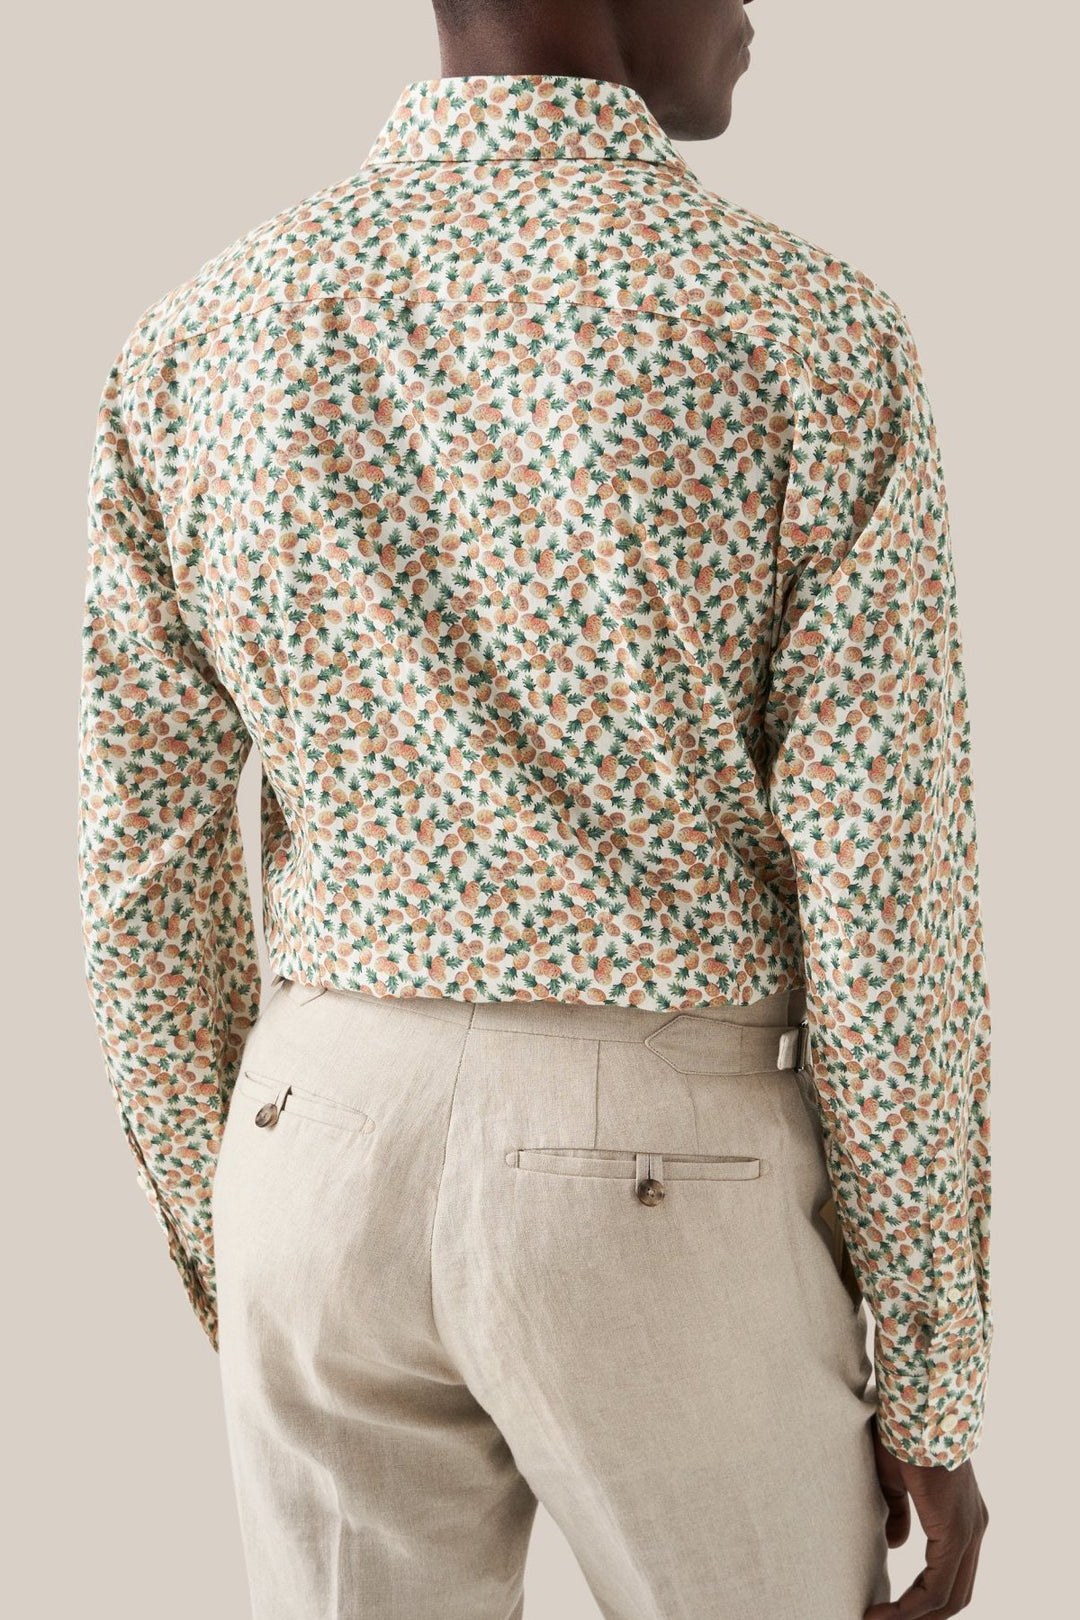 Pineapple print cotton and TENCEL shirt